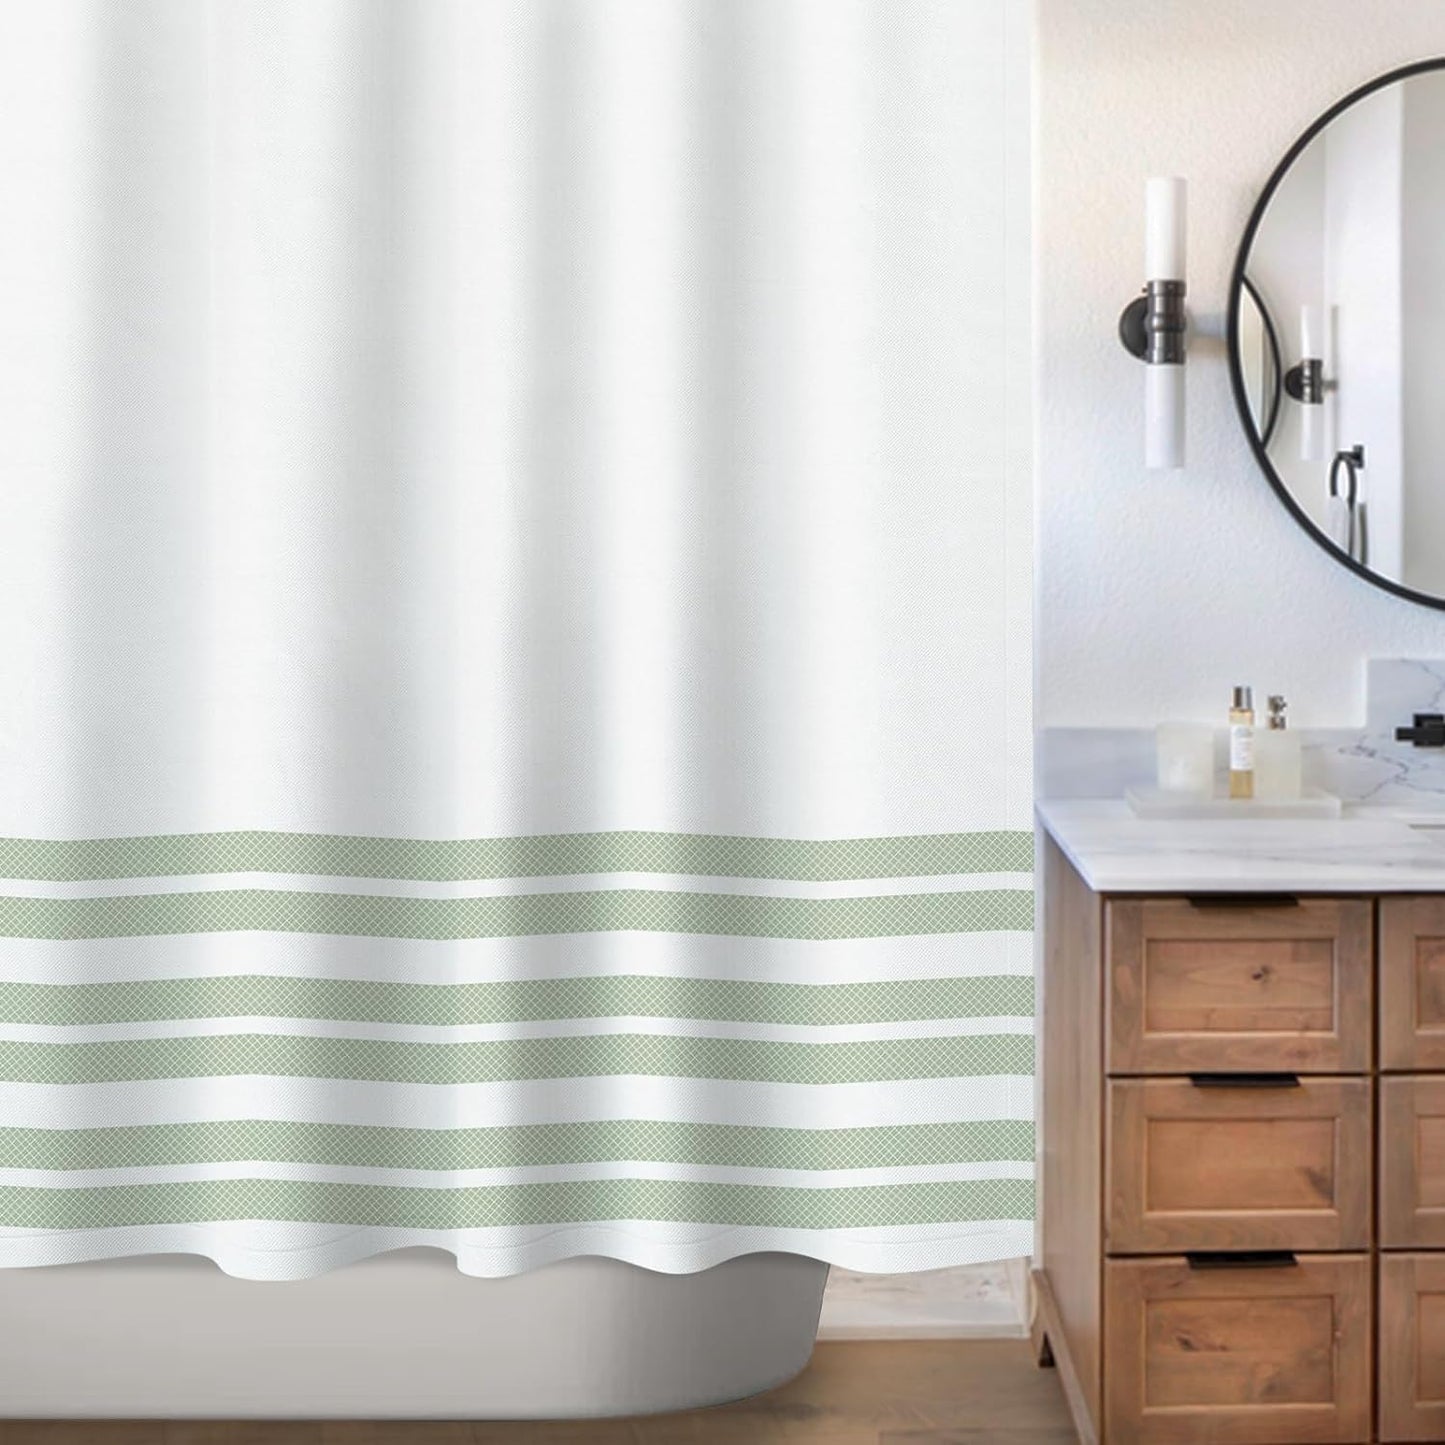 Sunlit Design Double Stripes Fabric Shower Curtain, Light Green Stripes Shower Curtains, Modern Style Refreshing Striped Design Bathroom Decor